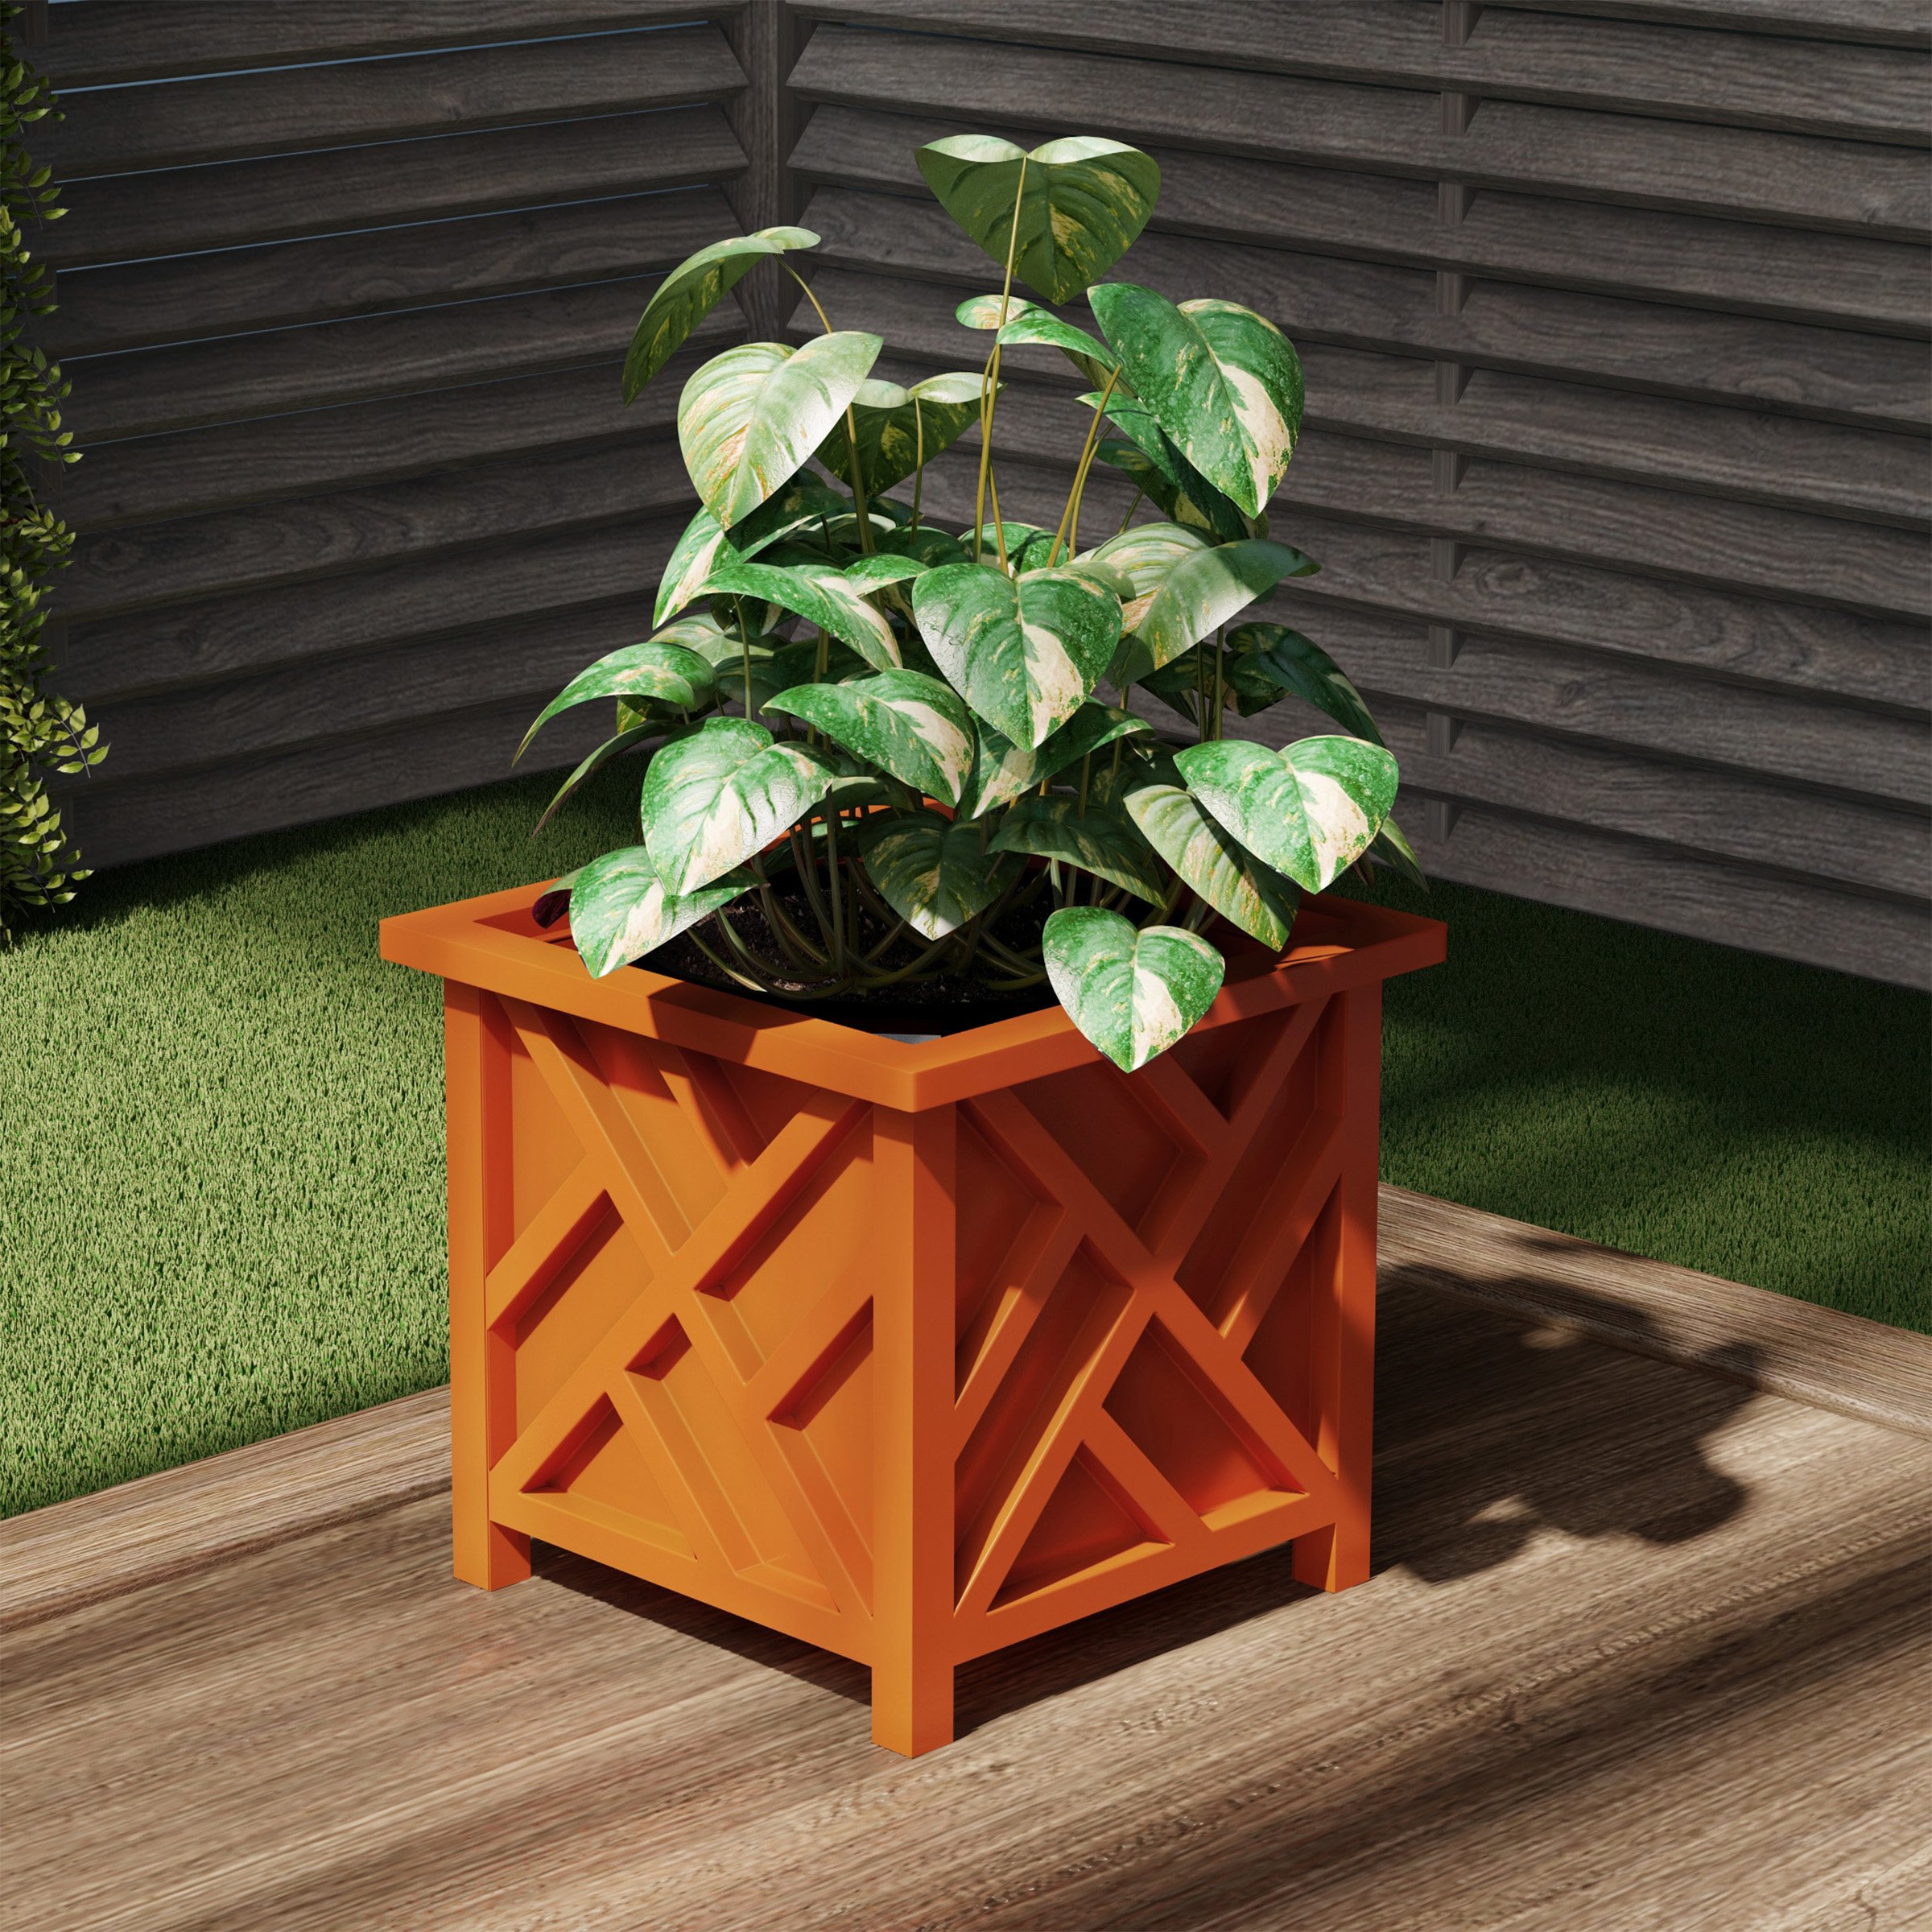 Square Planter Box- Black Lattice Container For Flowers & Plants Bottom Insert Holds Soil Outdoor Pot For Garden Patio - Terracotta